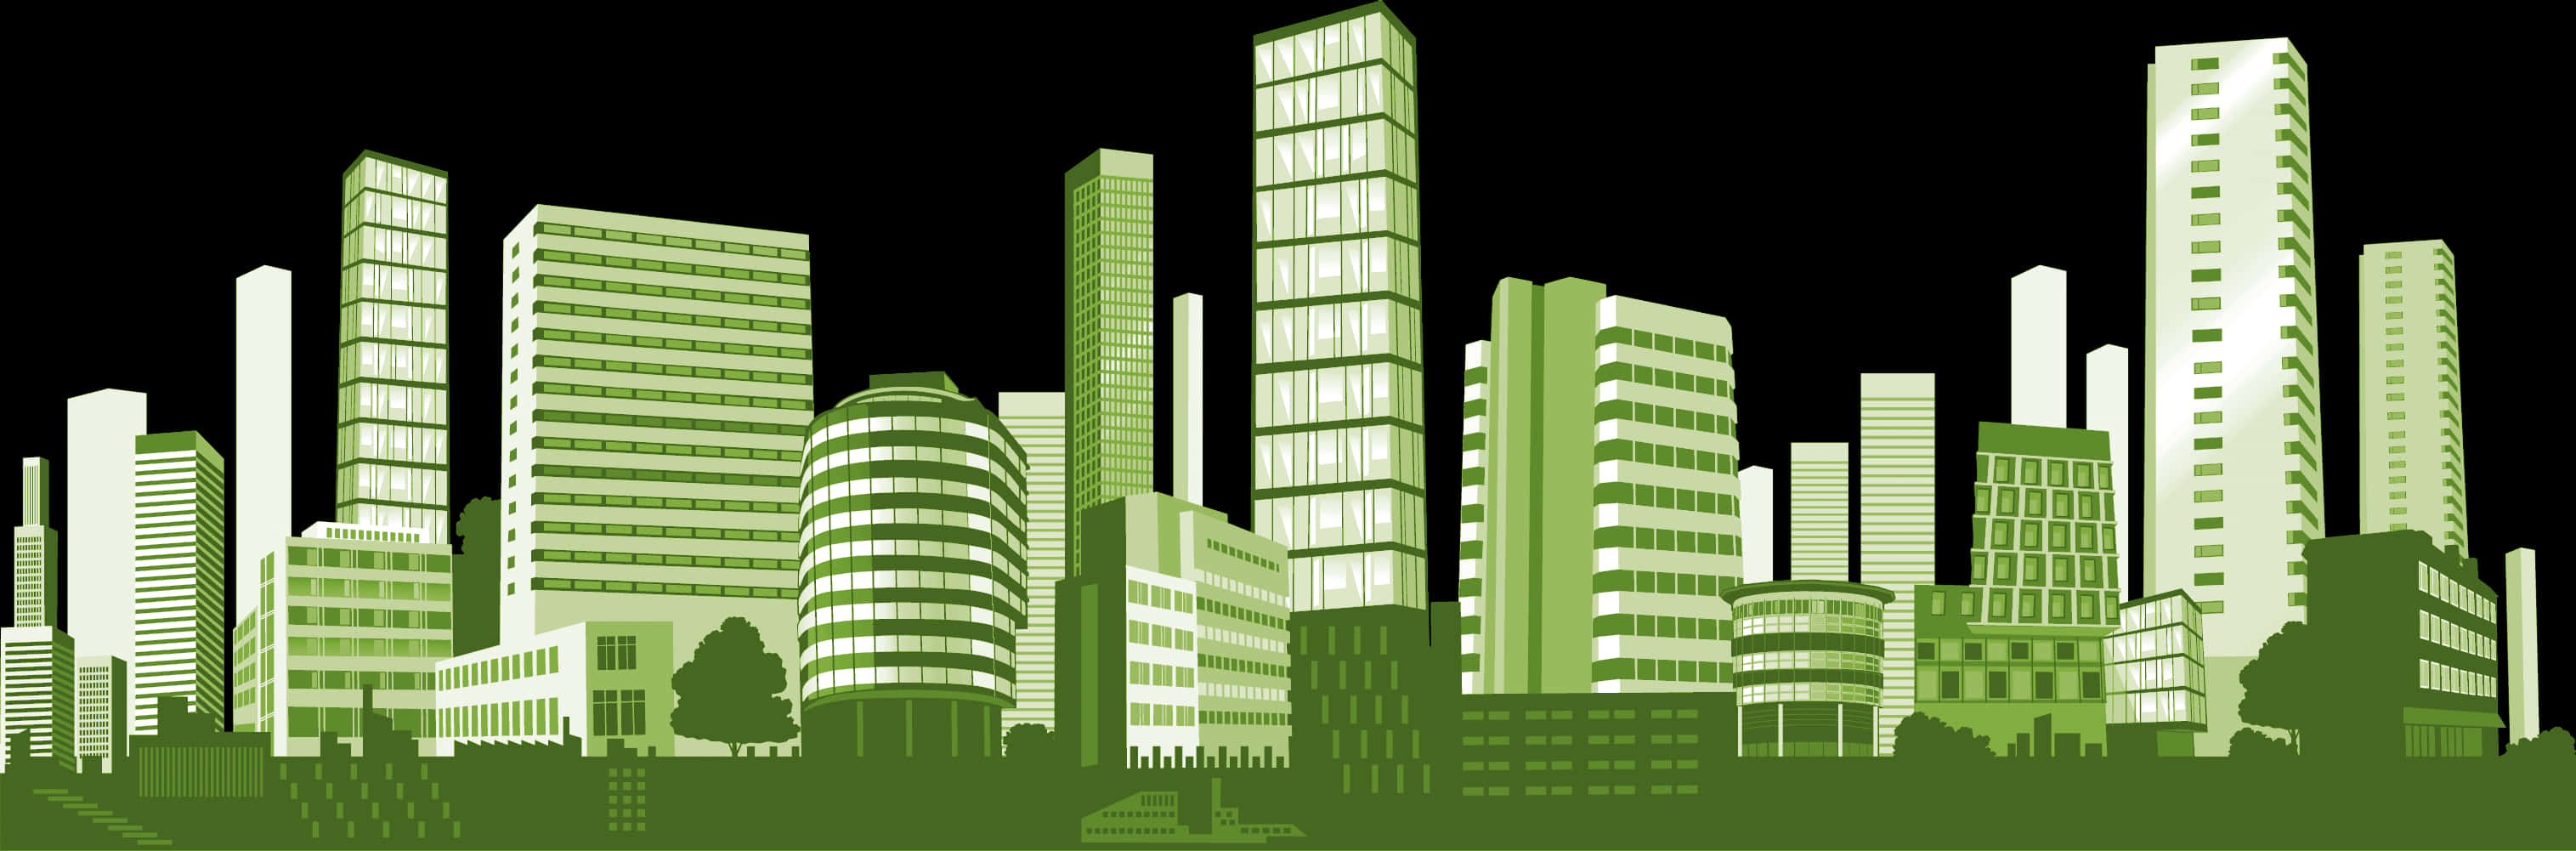 Green City Skyline Illustration